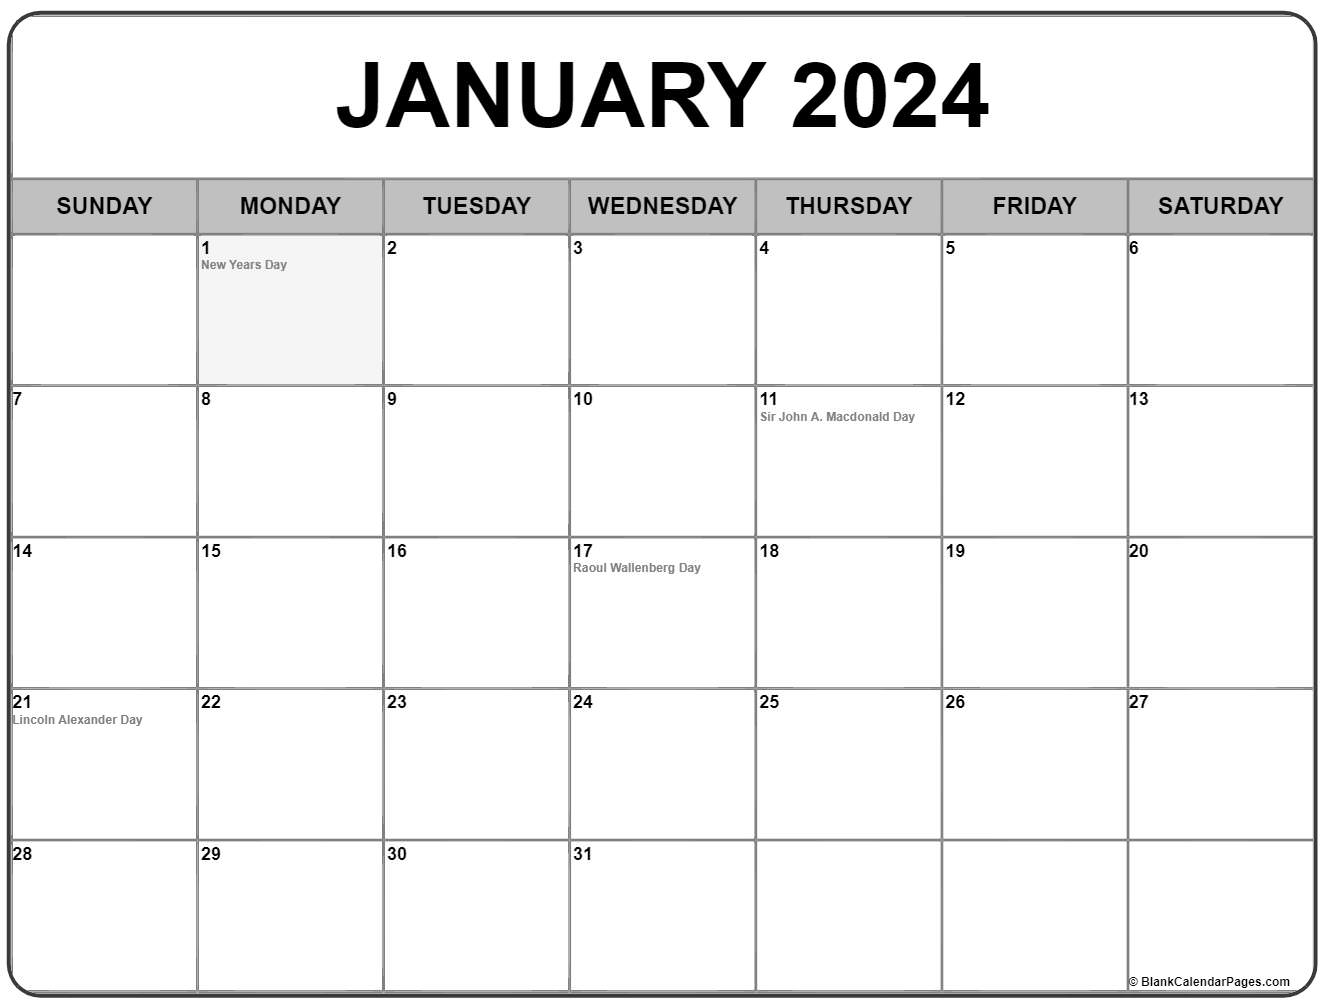 2022 january January 2022